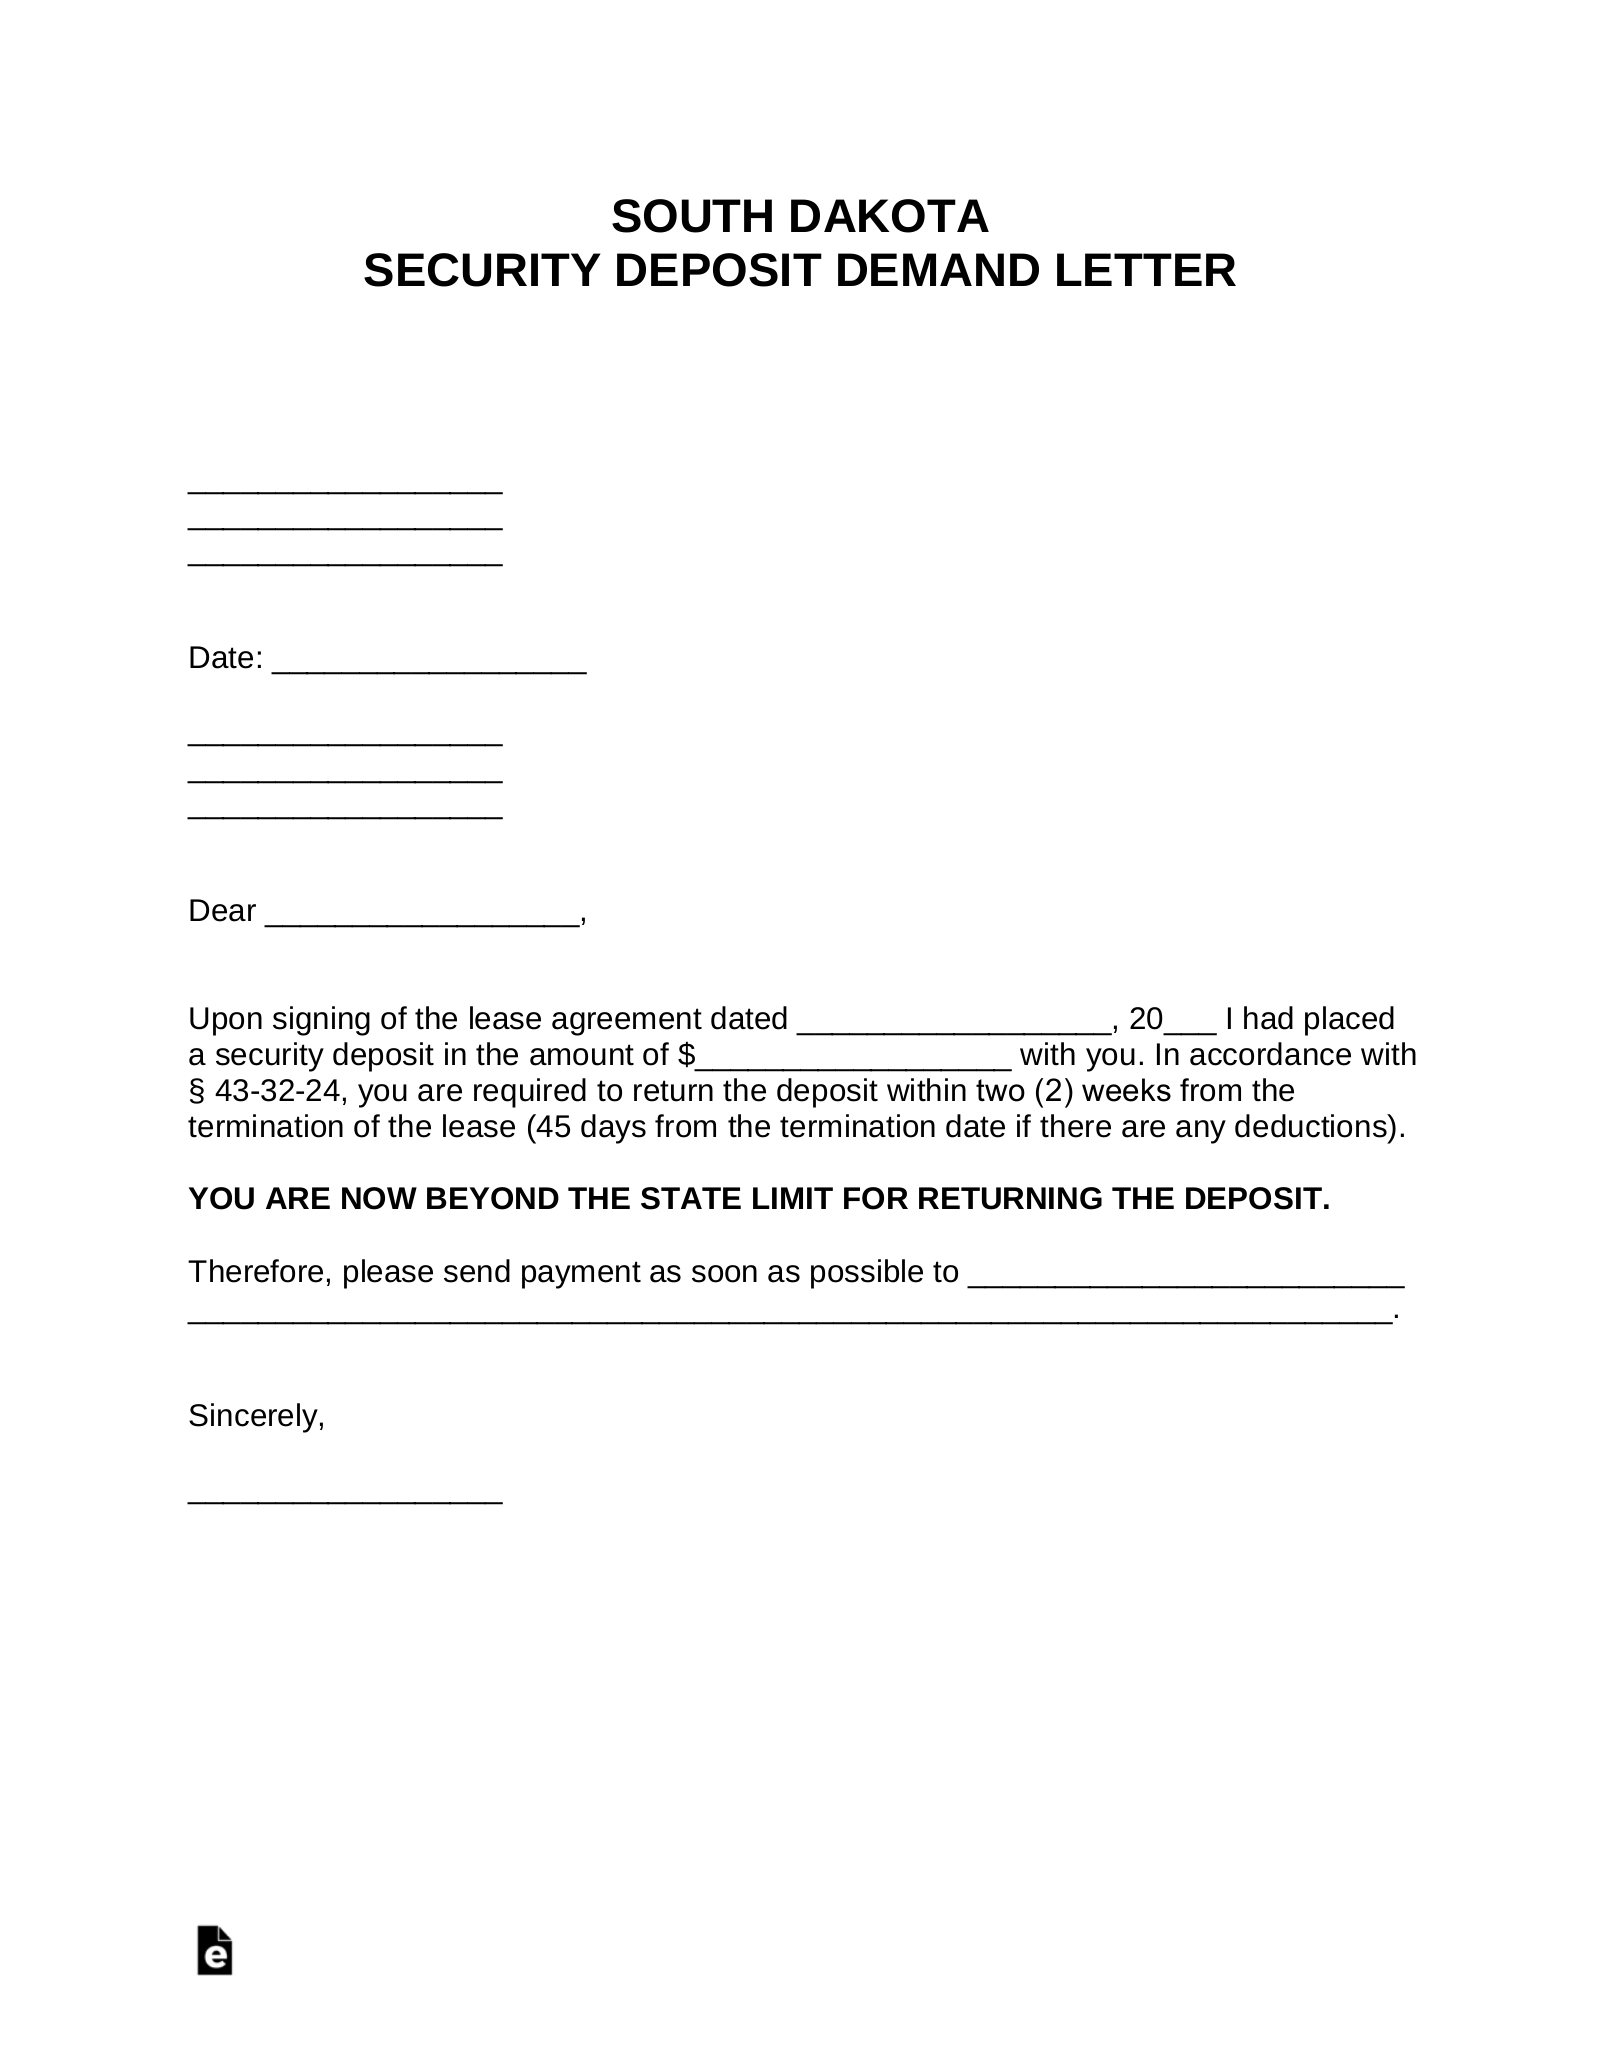 South Dakota Security Deposit Demand Letter